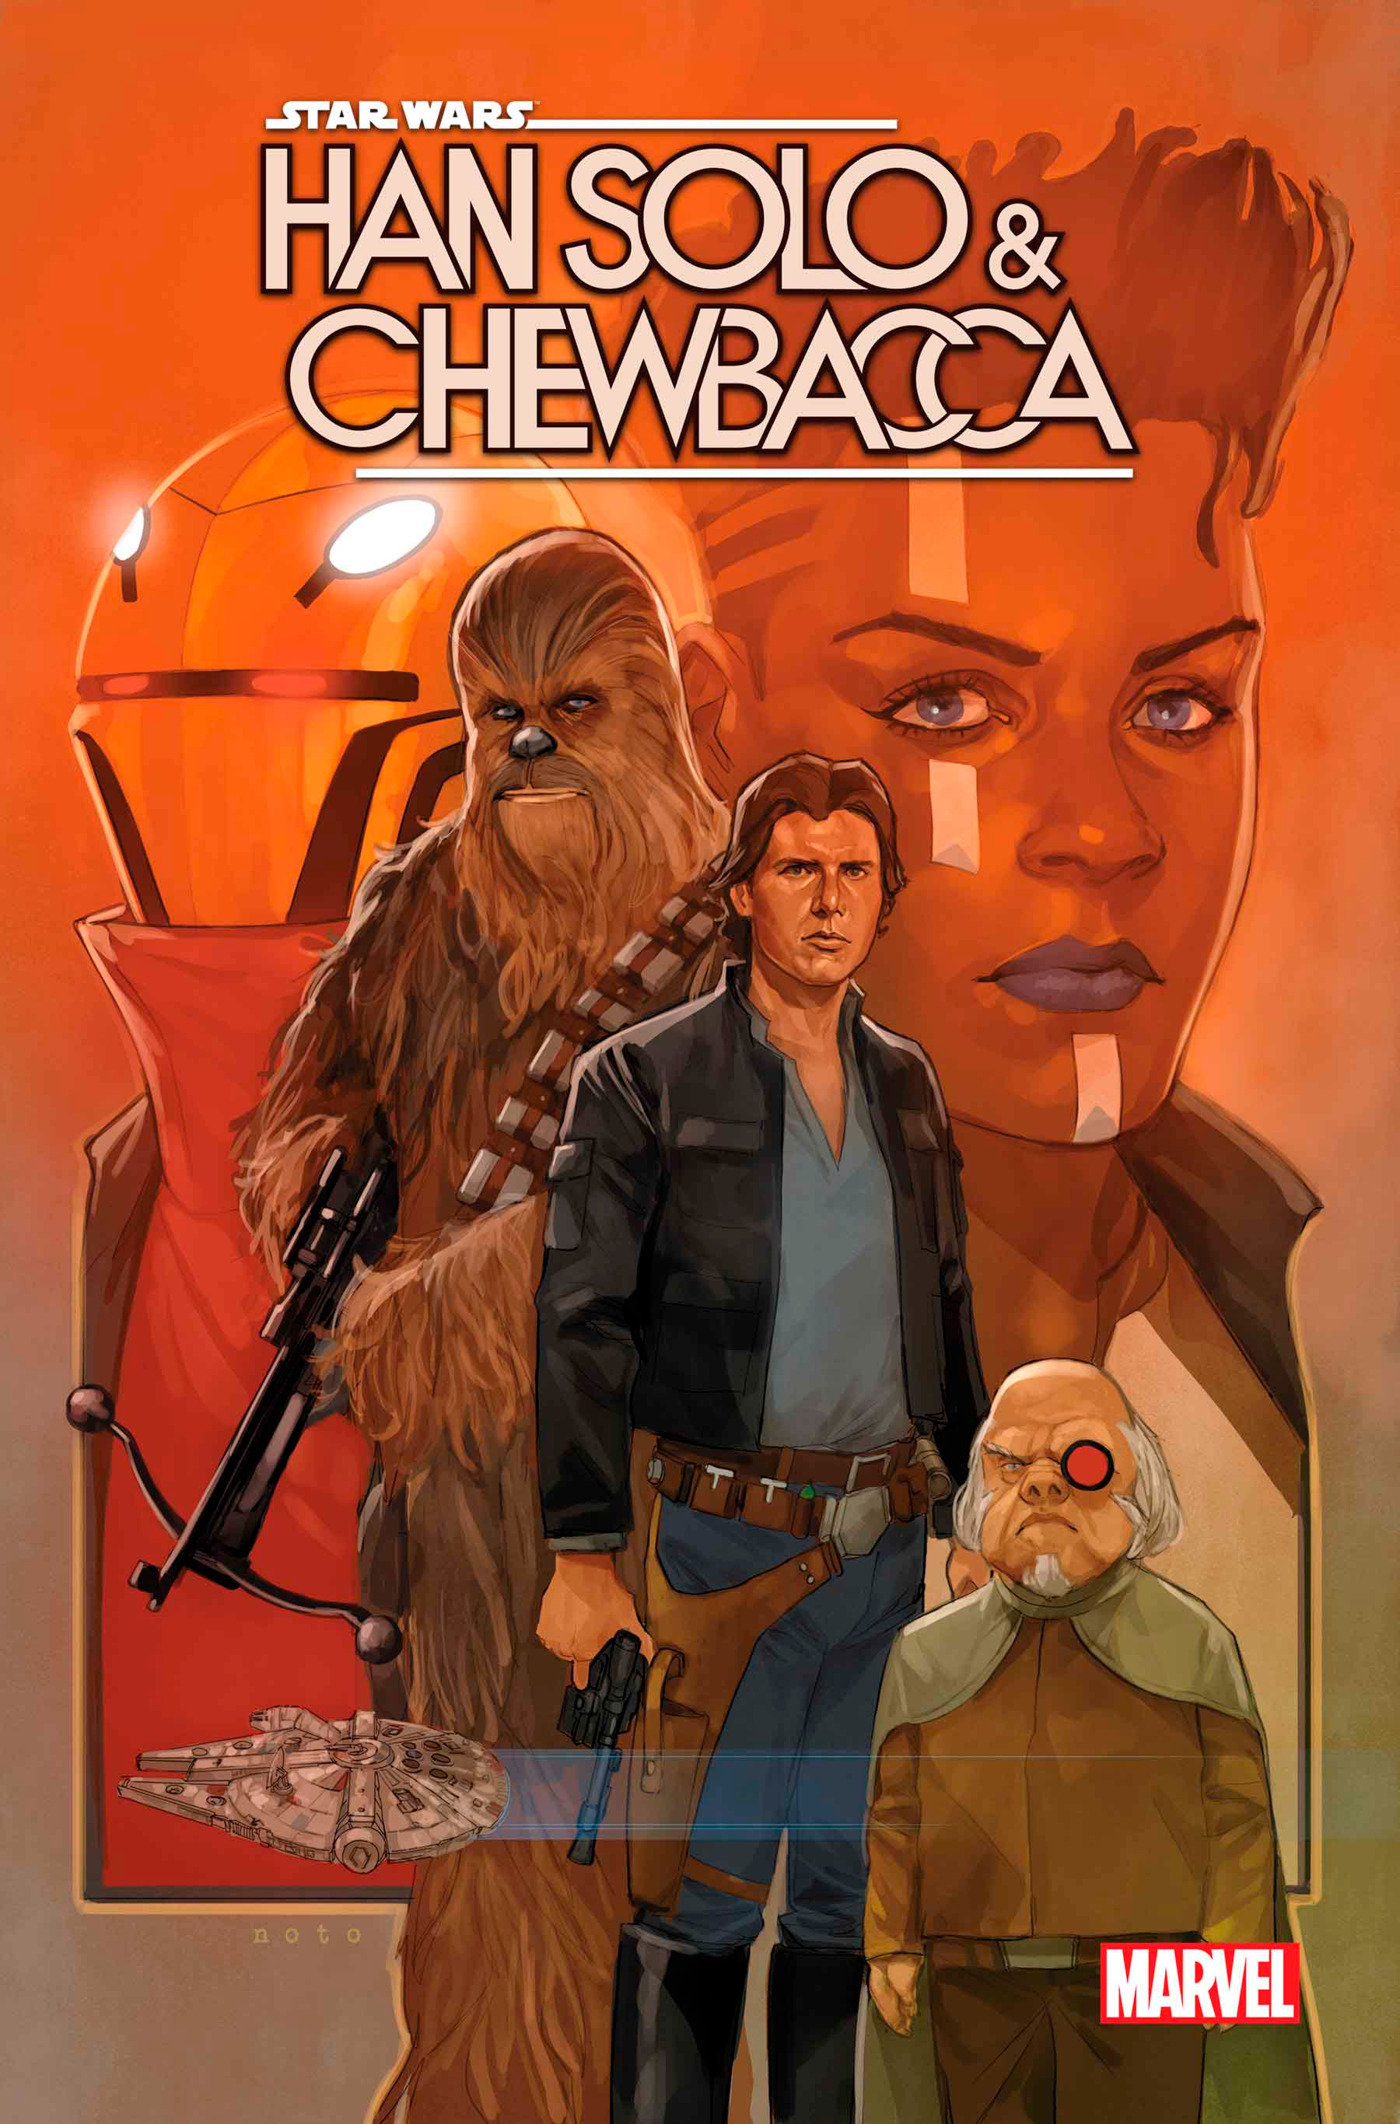 Star Wars Han Solo & Chewbacca #9